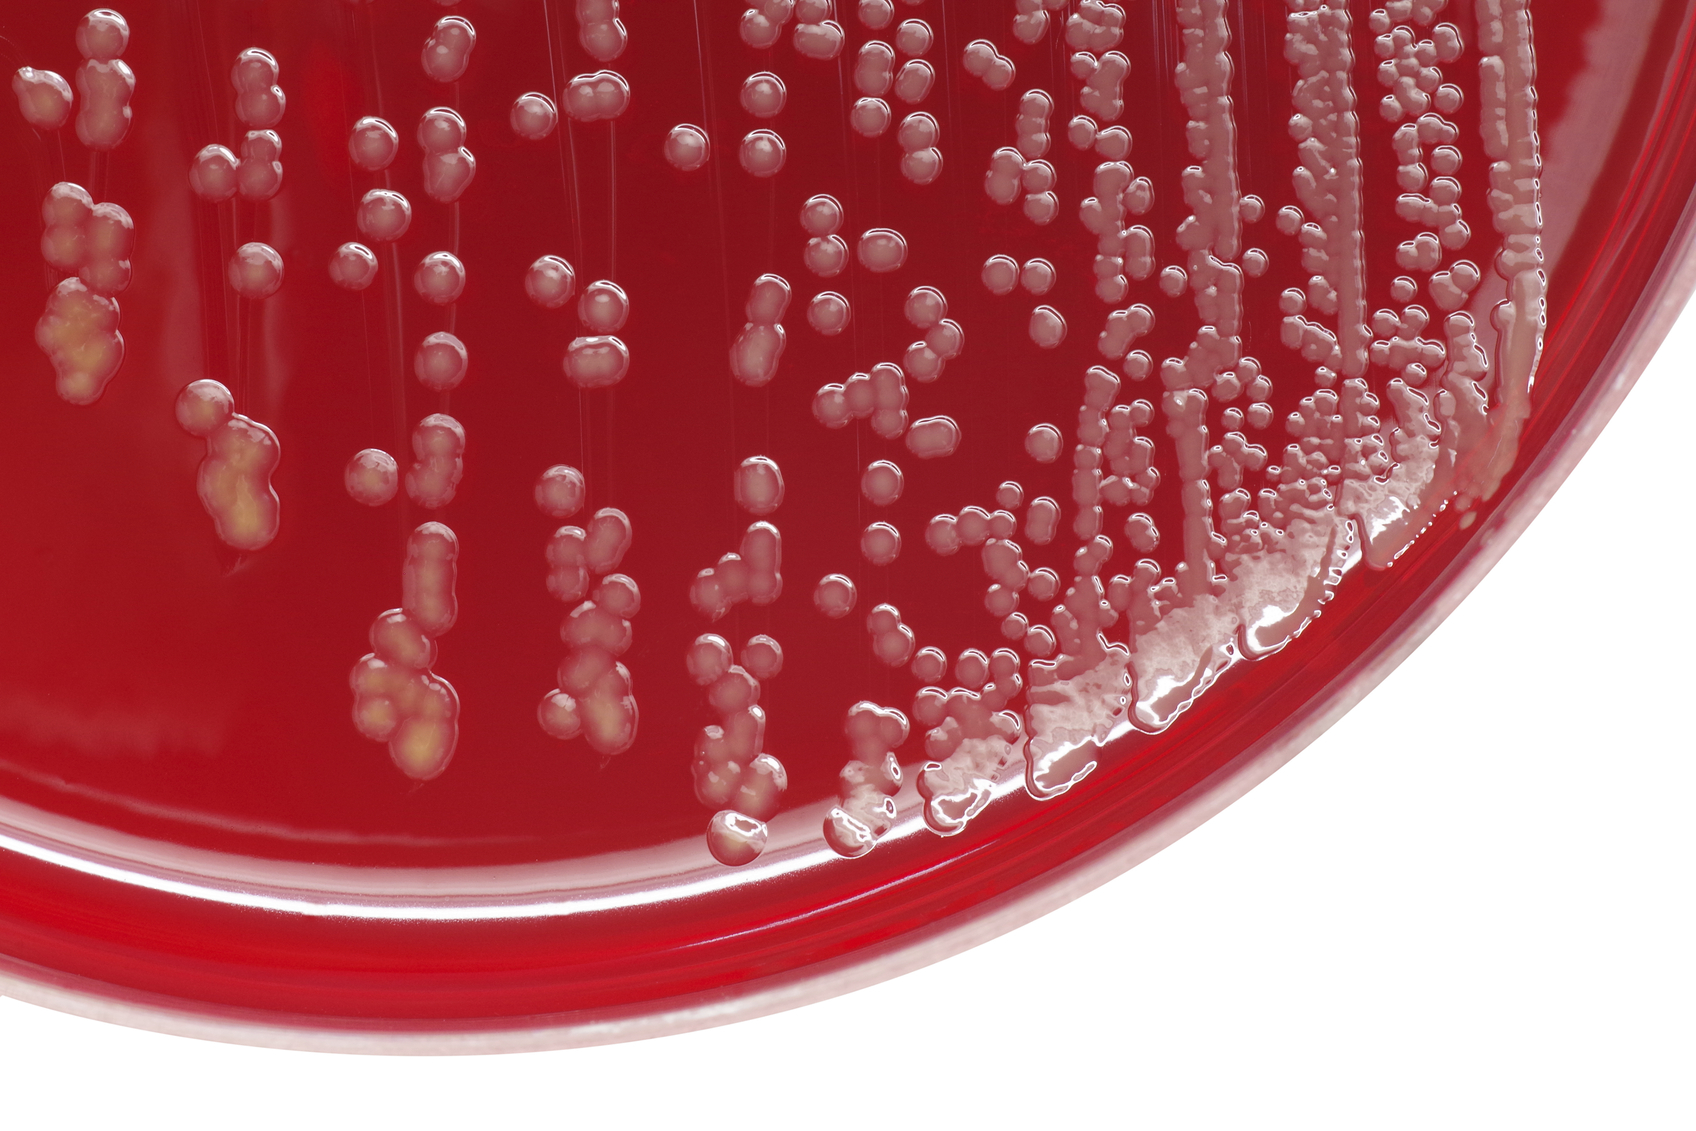 Staphylococcus aureus bacterial colonies on blood agar plate